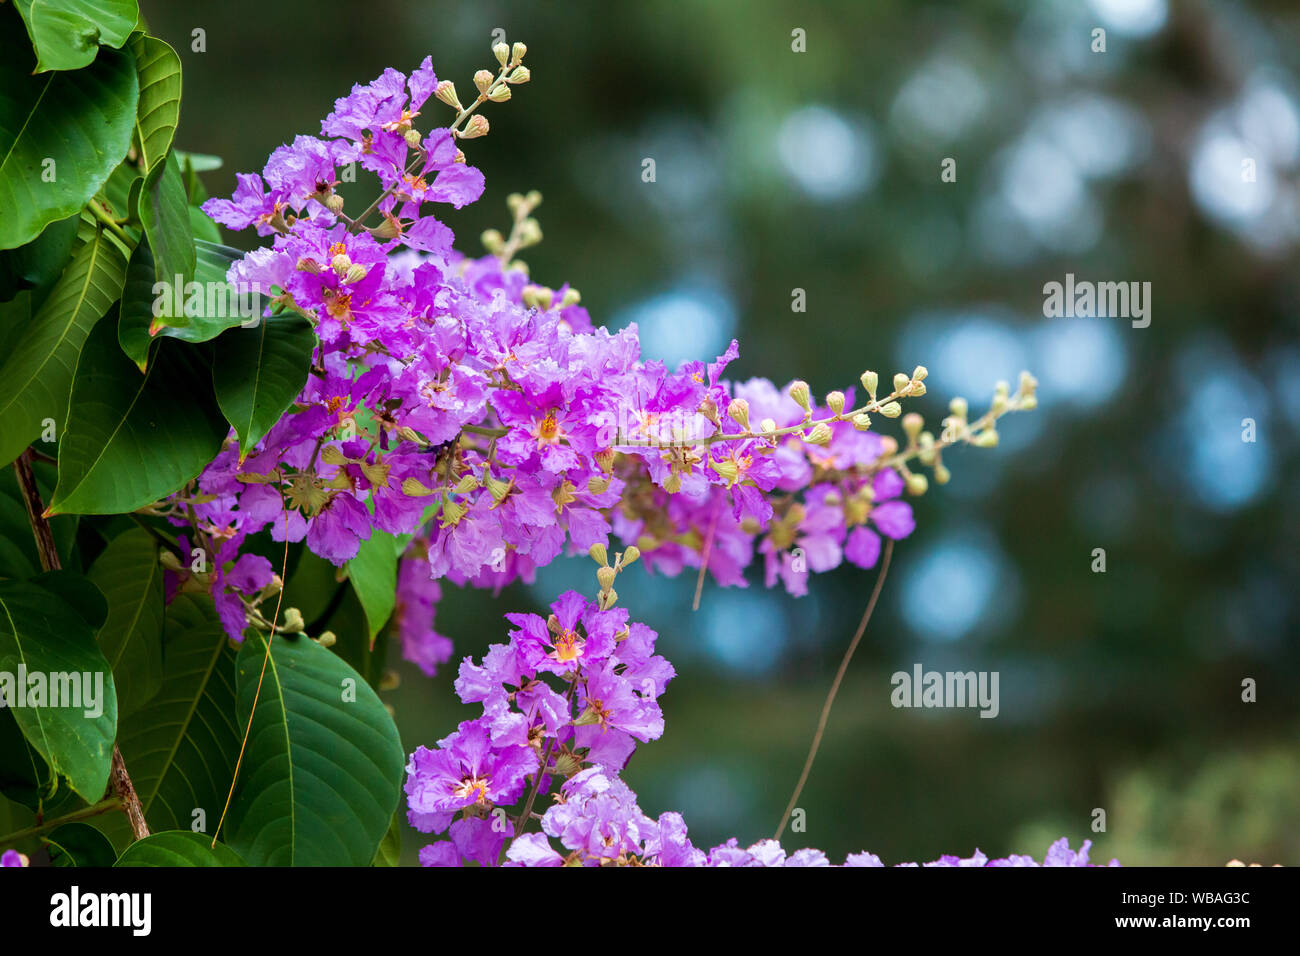 Pride of India flower on tree. Stock Photo